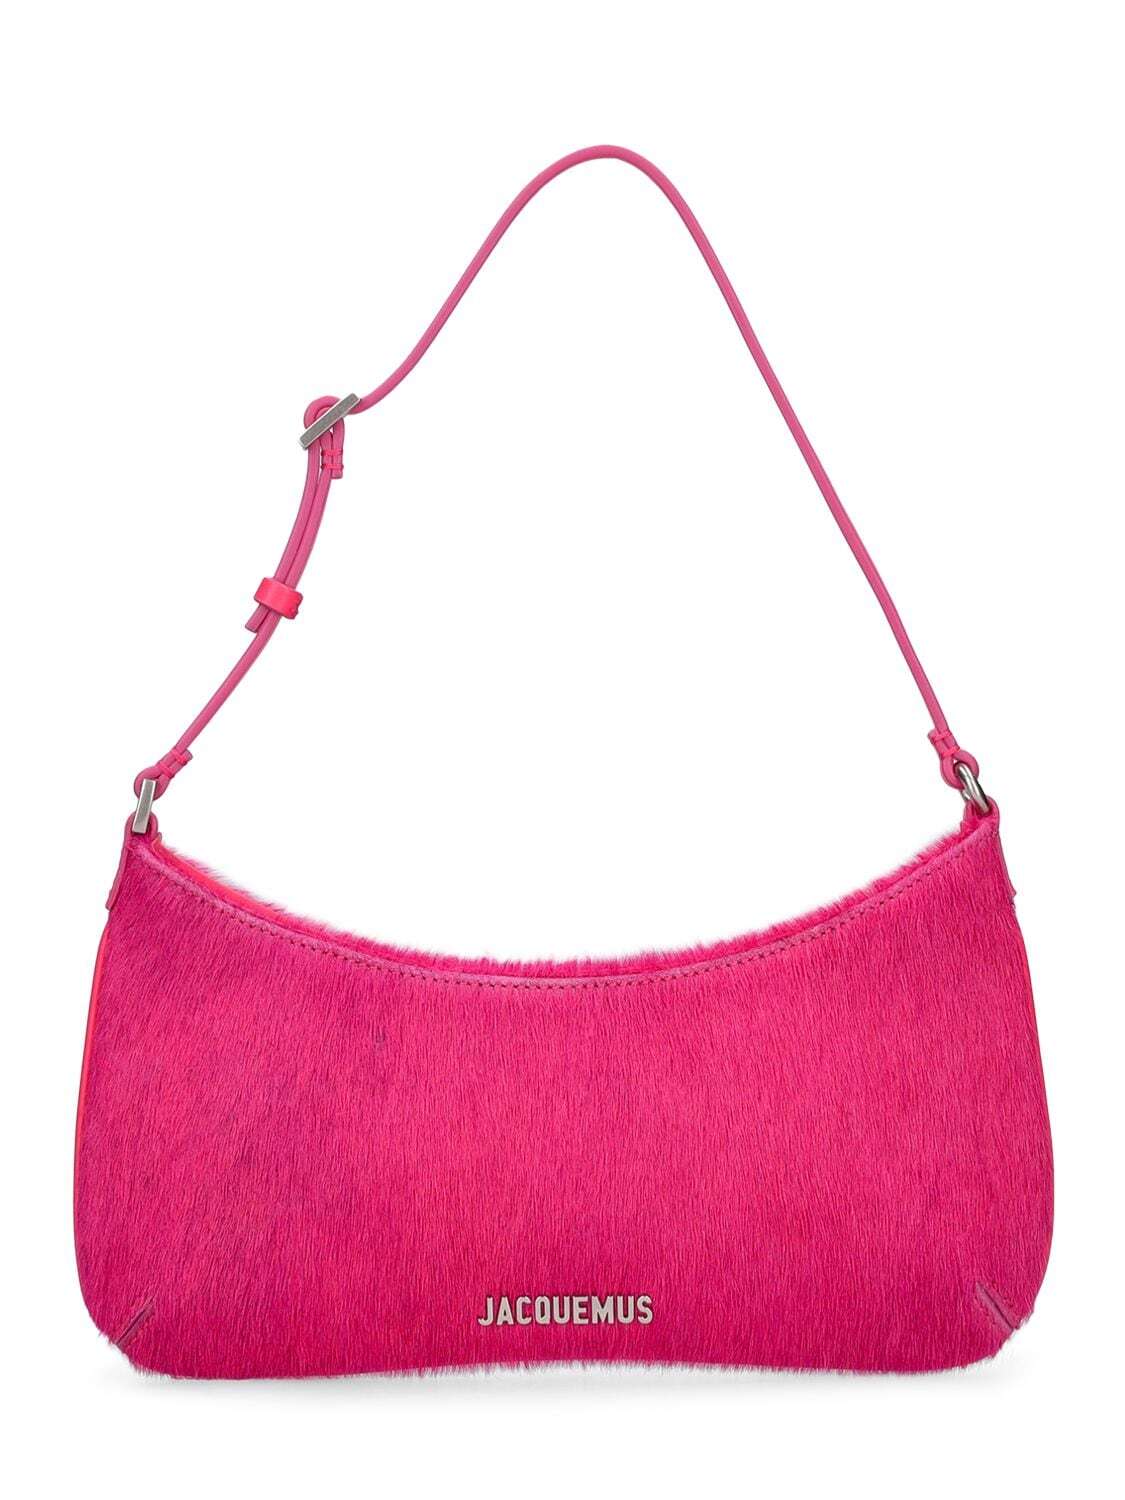 JACQUEMUS Le Bisou Ponyhair Shoulder Bag in pink